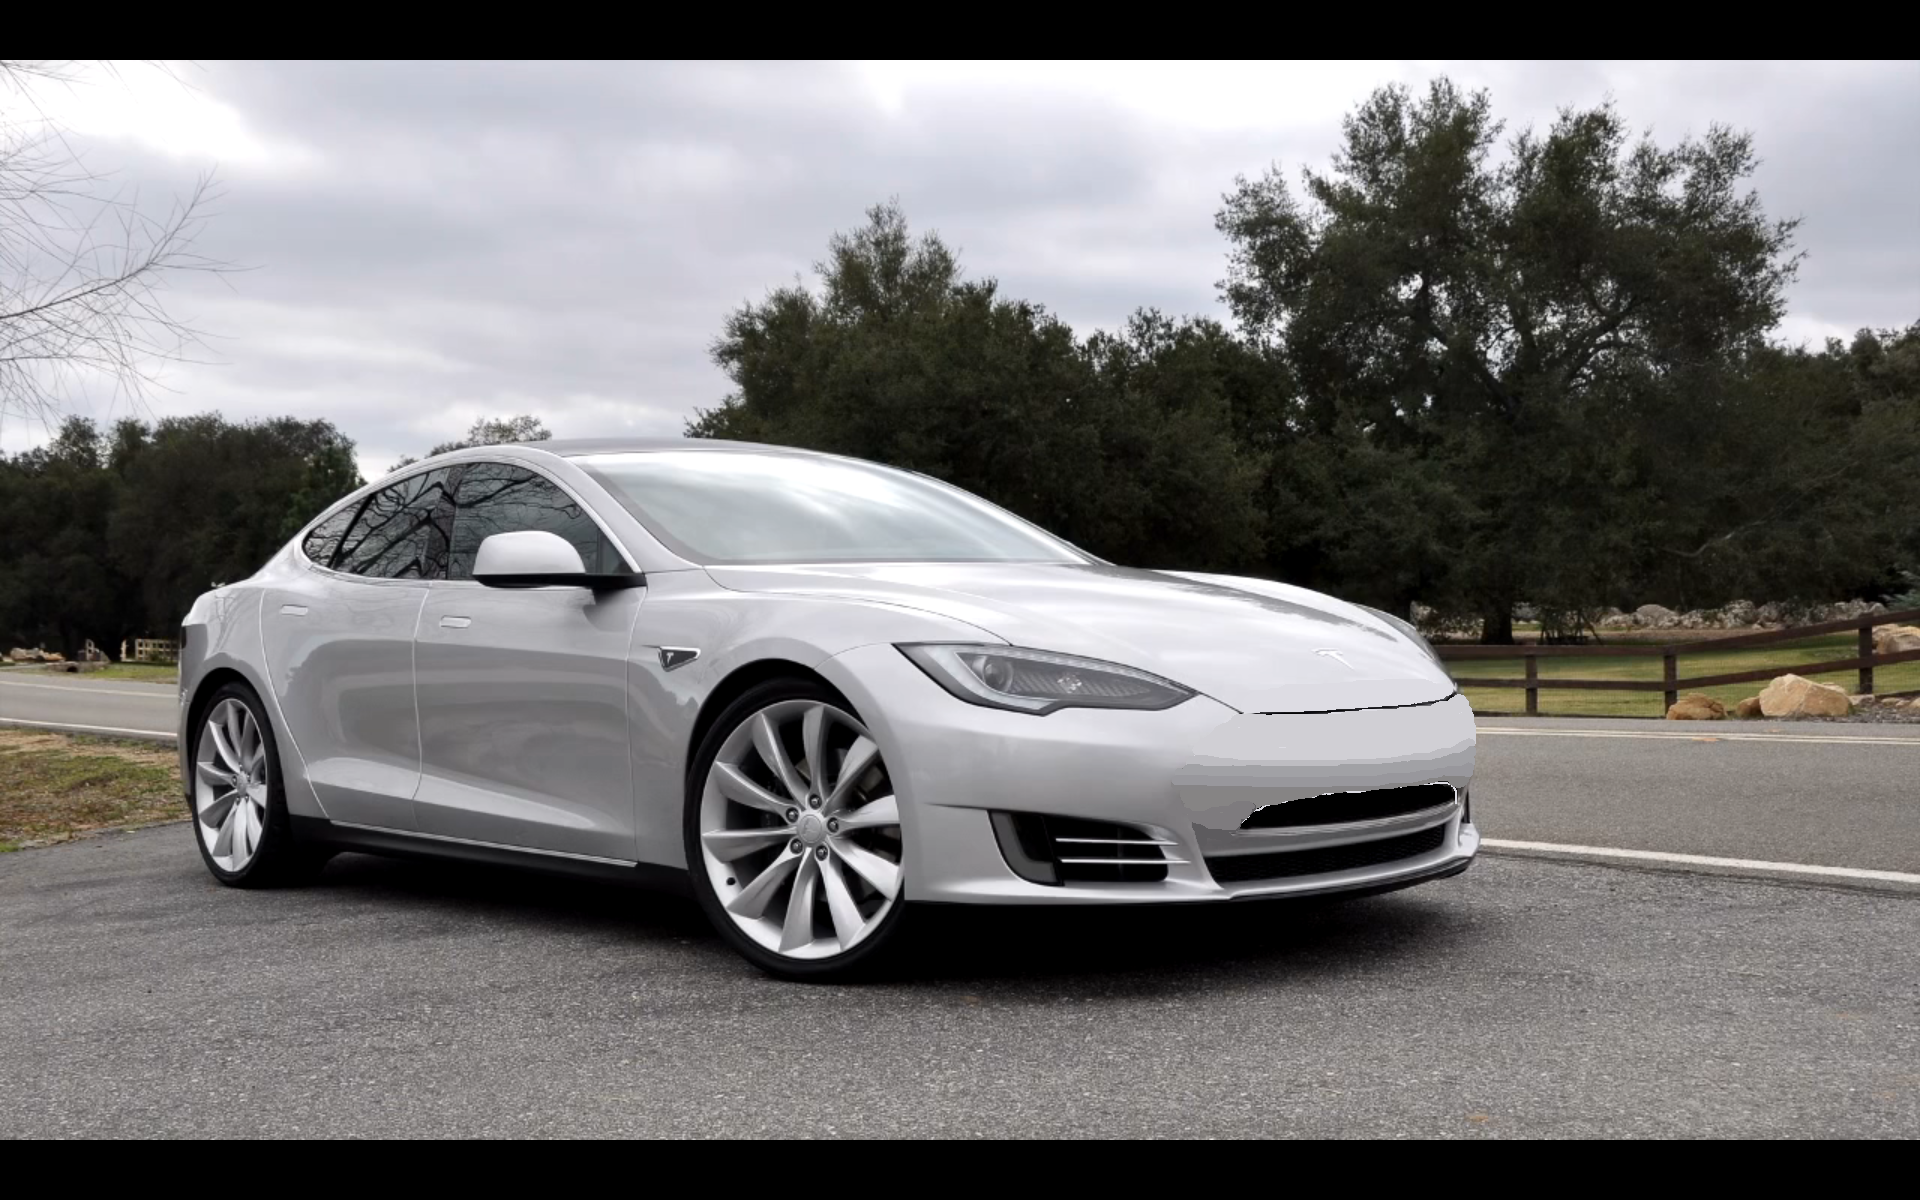 Electrification 2.0: Tesla